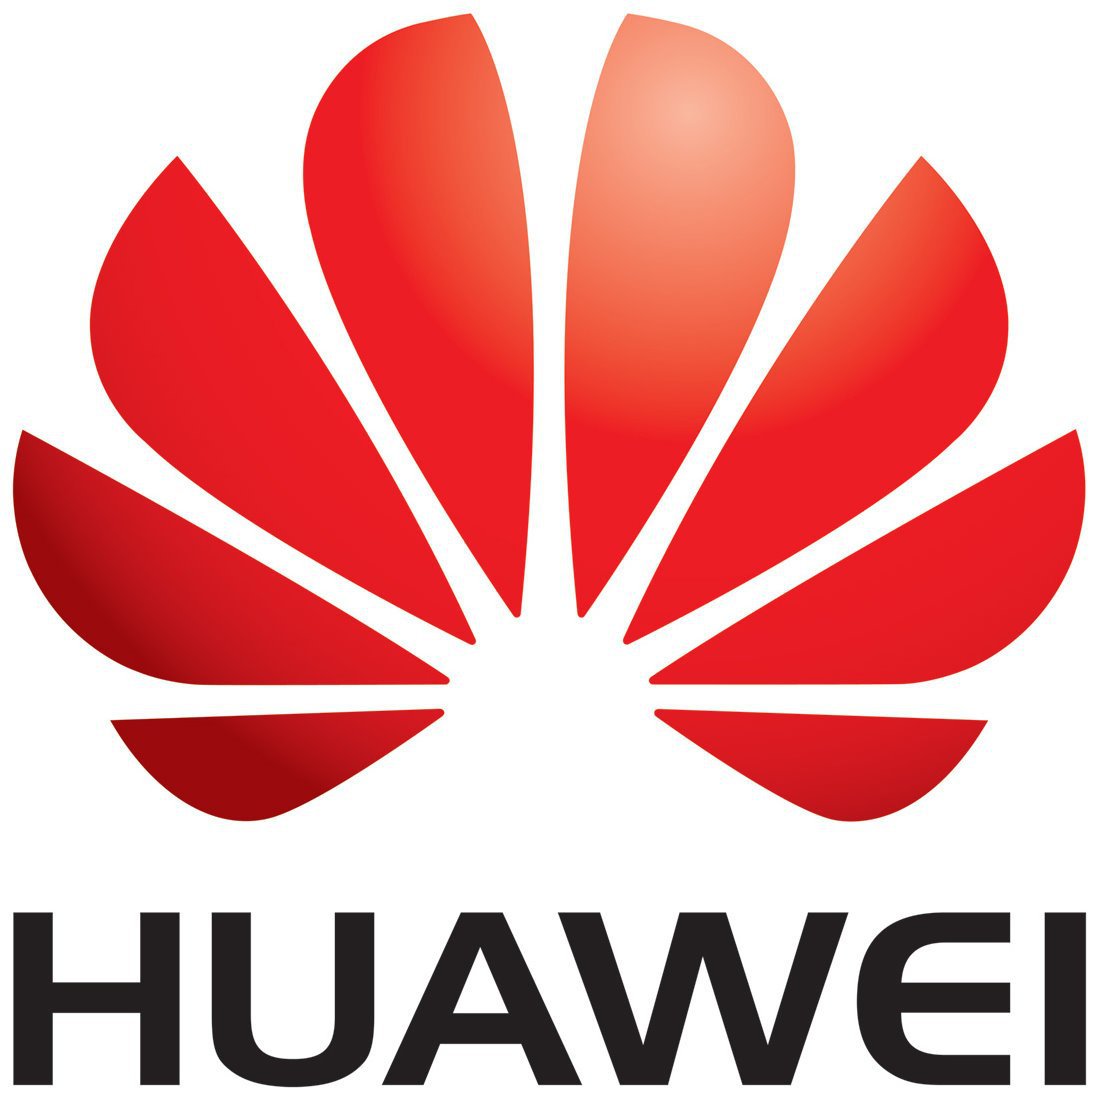 Huawei Logo Wallpaper